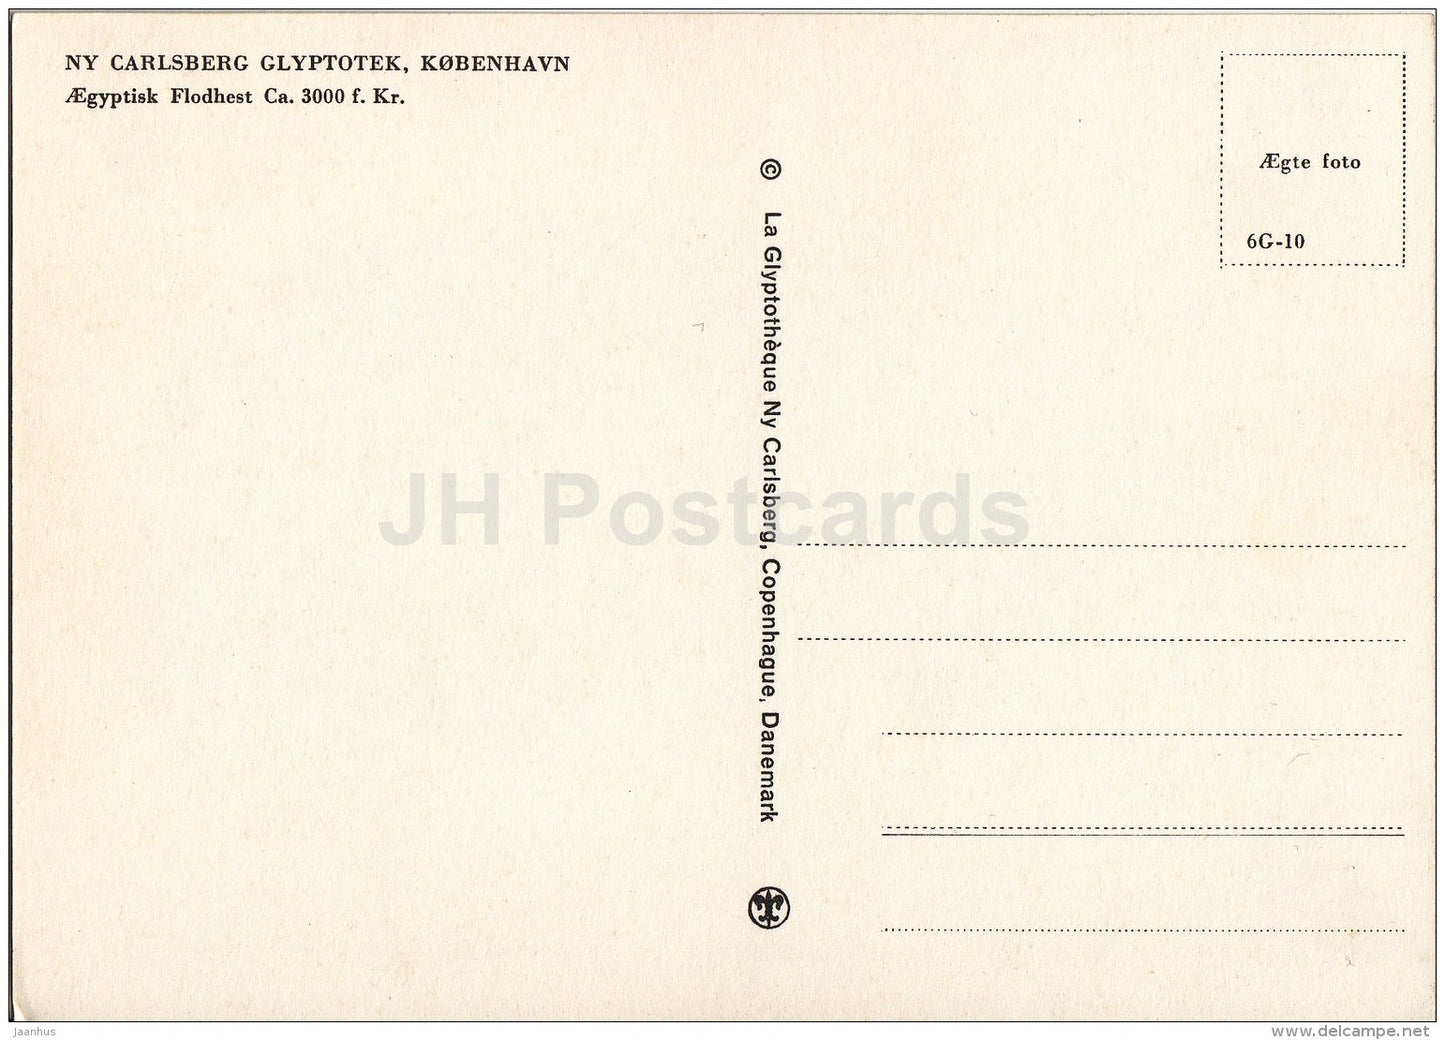 Hippopotamus - Ancient Egypt - Ny Carlsberg Glyptotek - Copenhagen - unused - JH Postcards